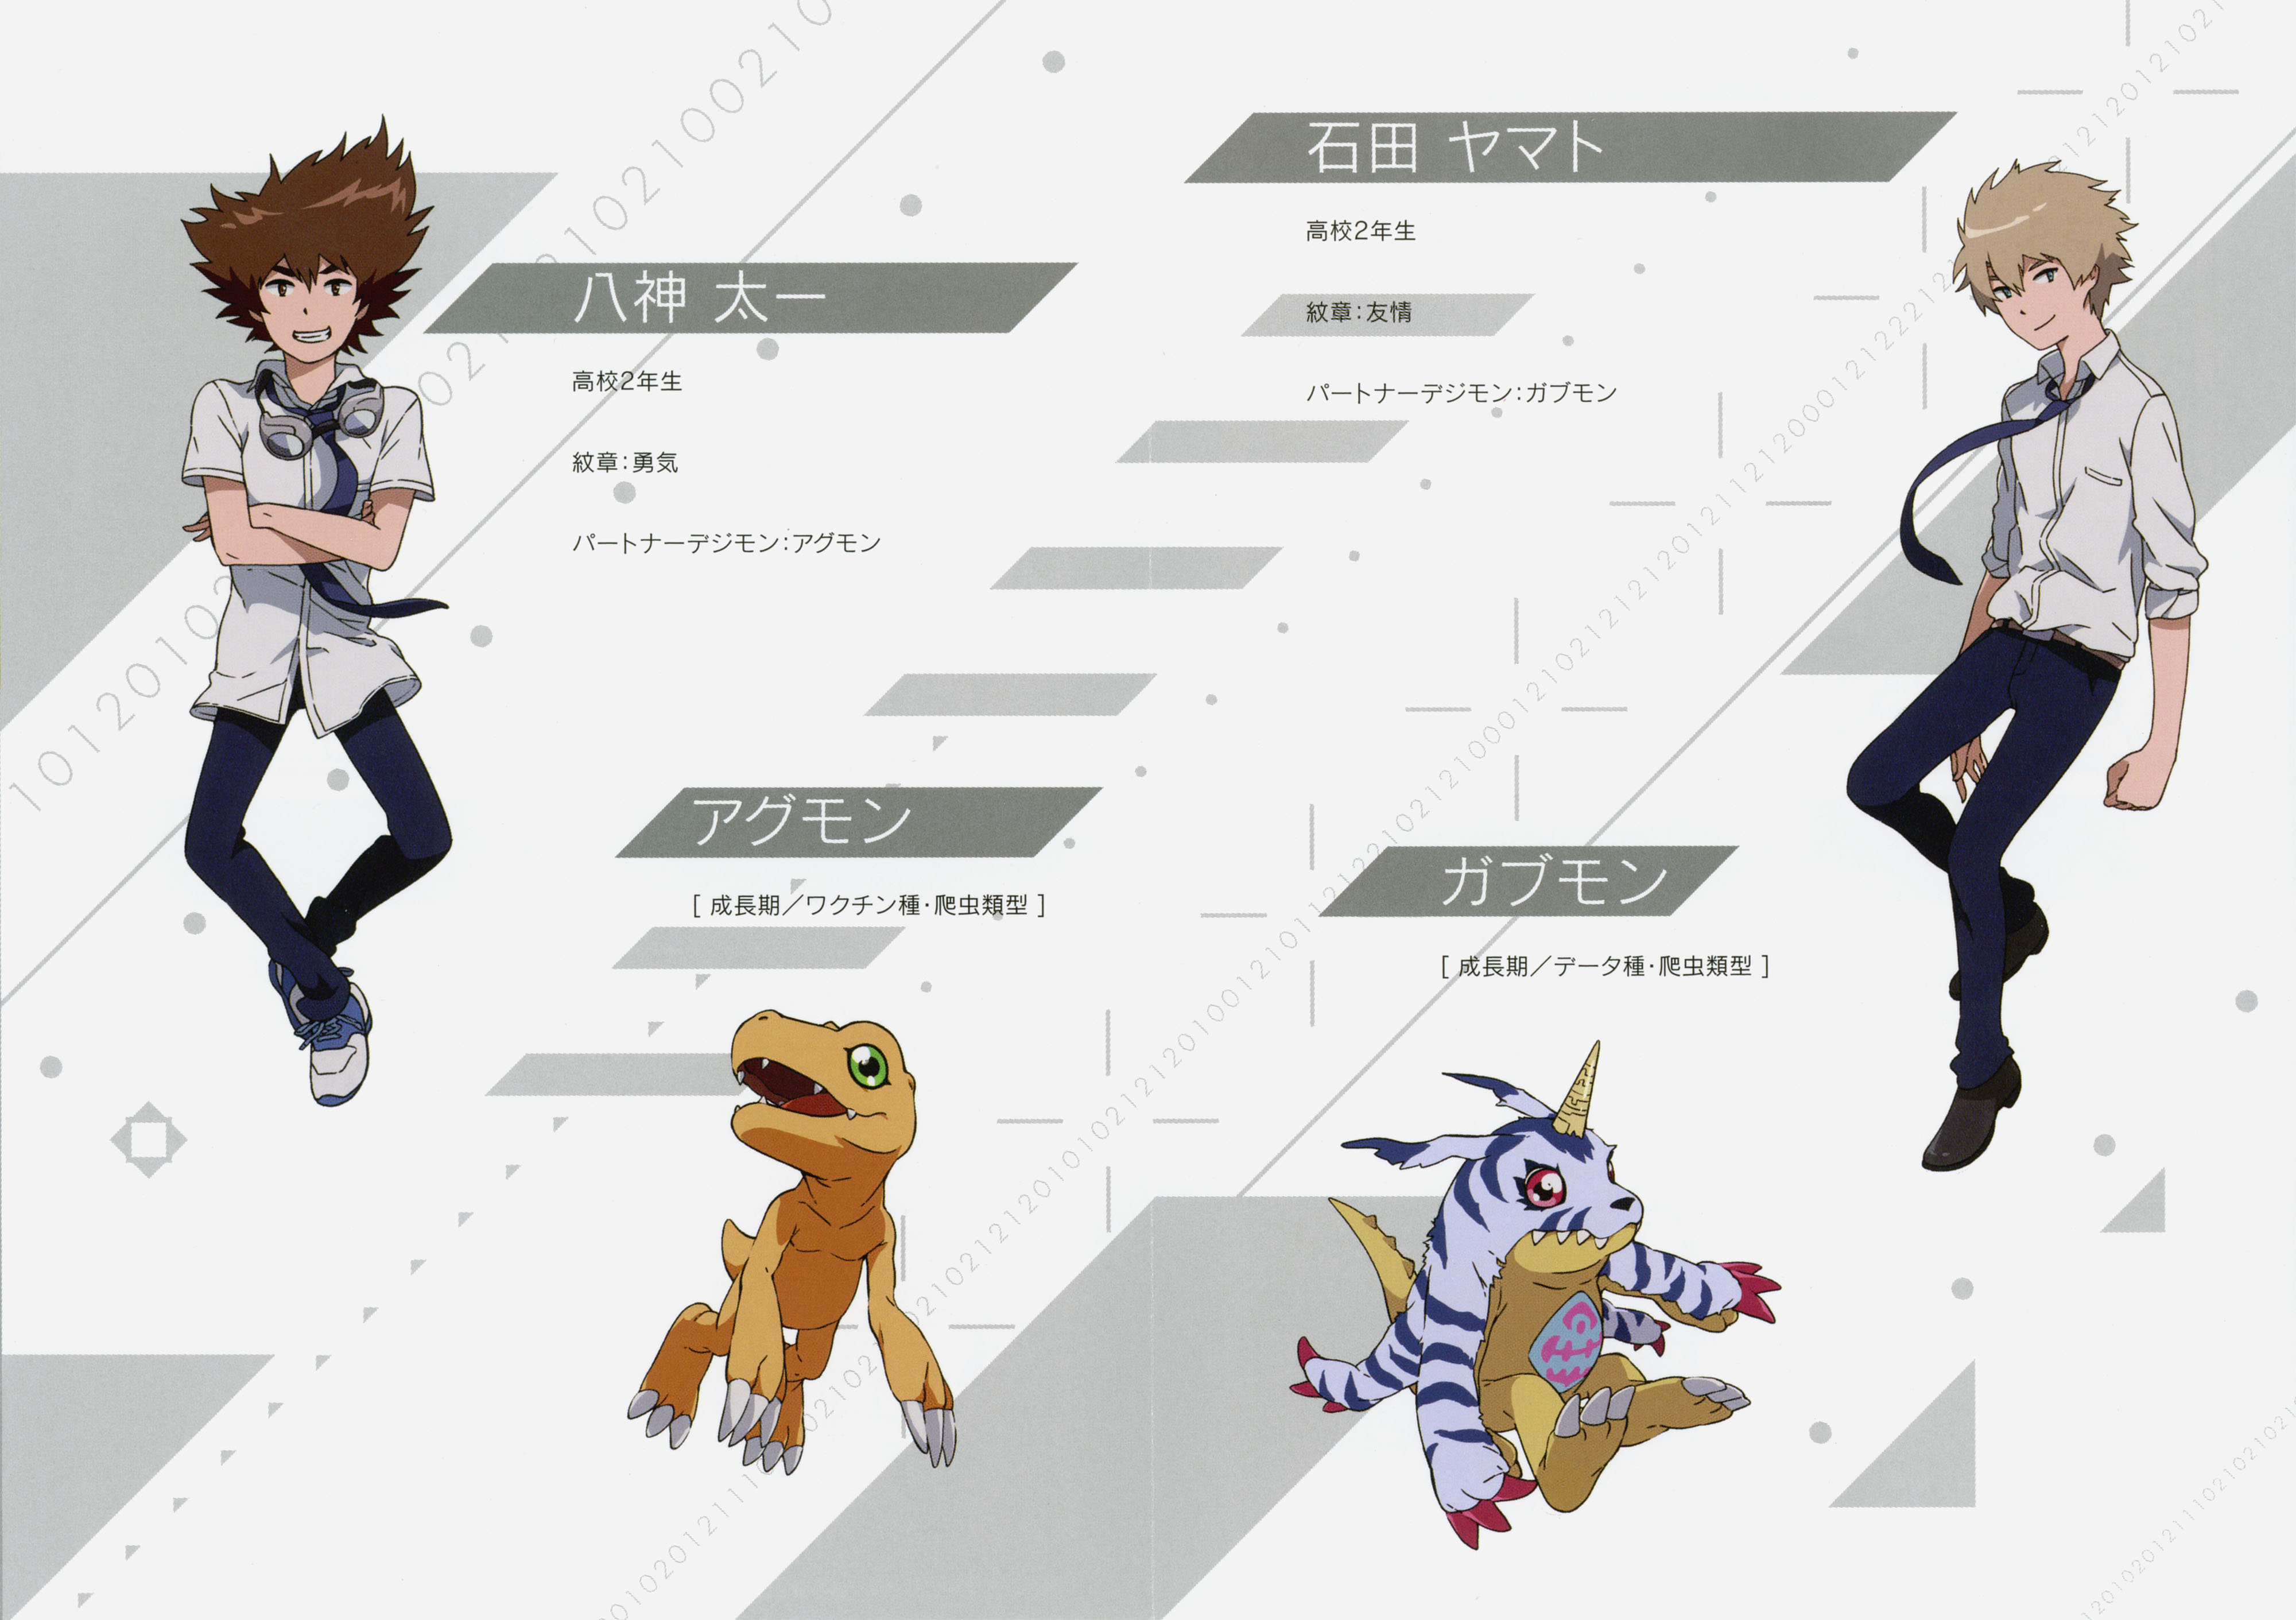 Digimon Adventure Tri. Character Design Visuals Revealed - Haruhichan